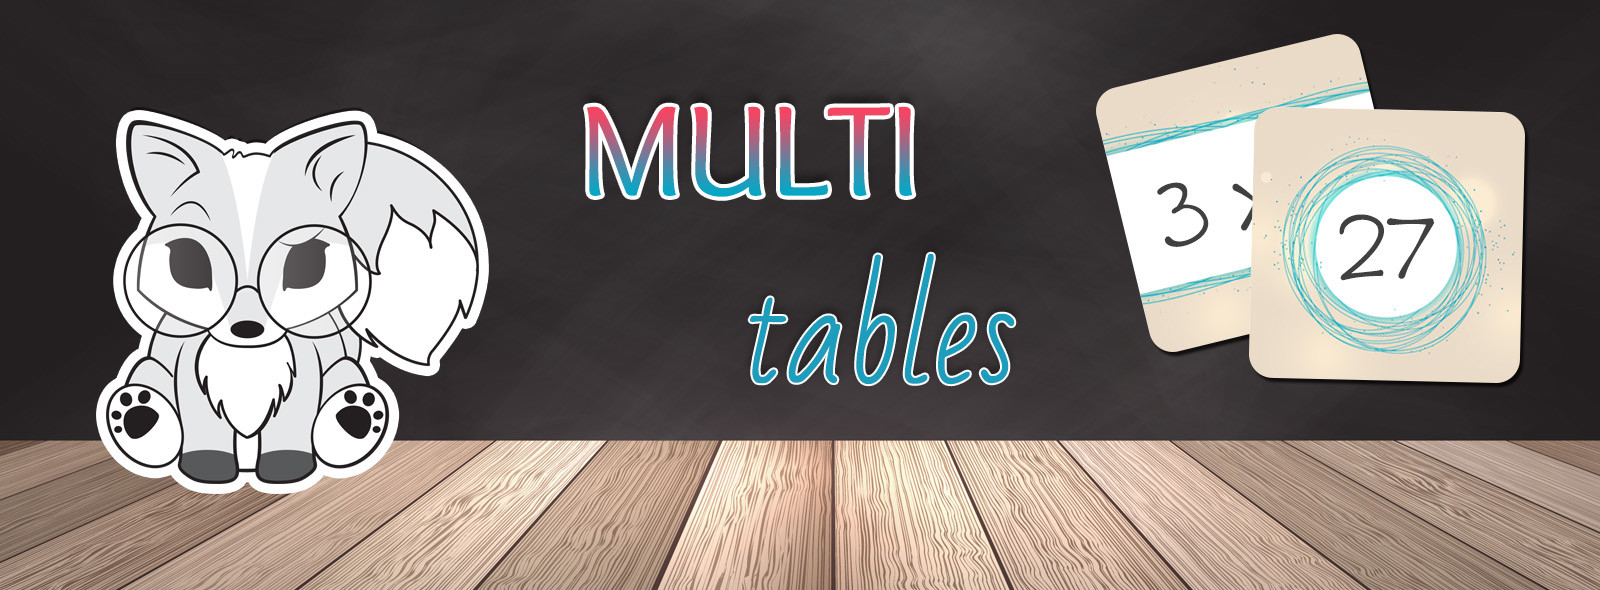 Multi tables - jeu des tables de multiplications